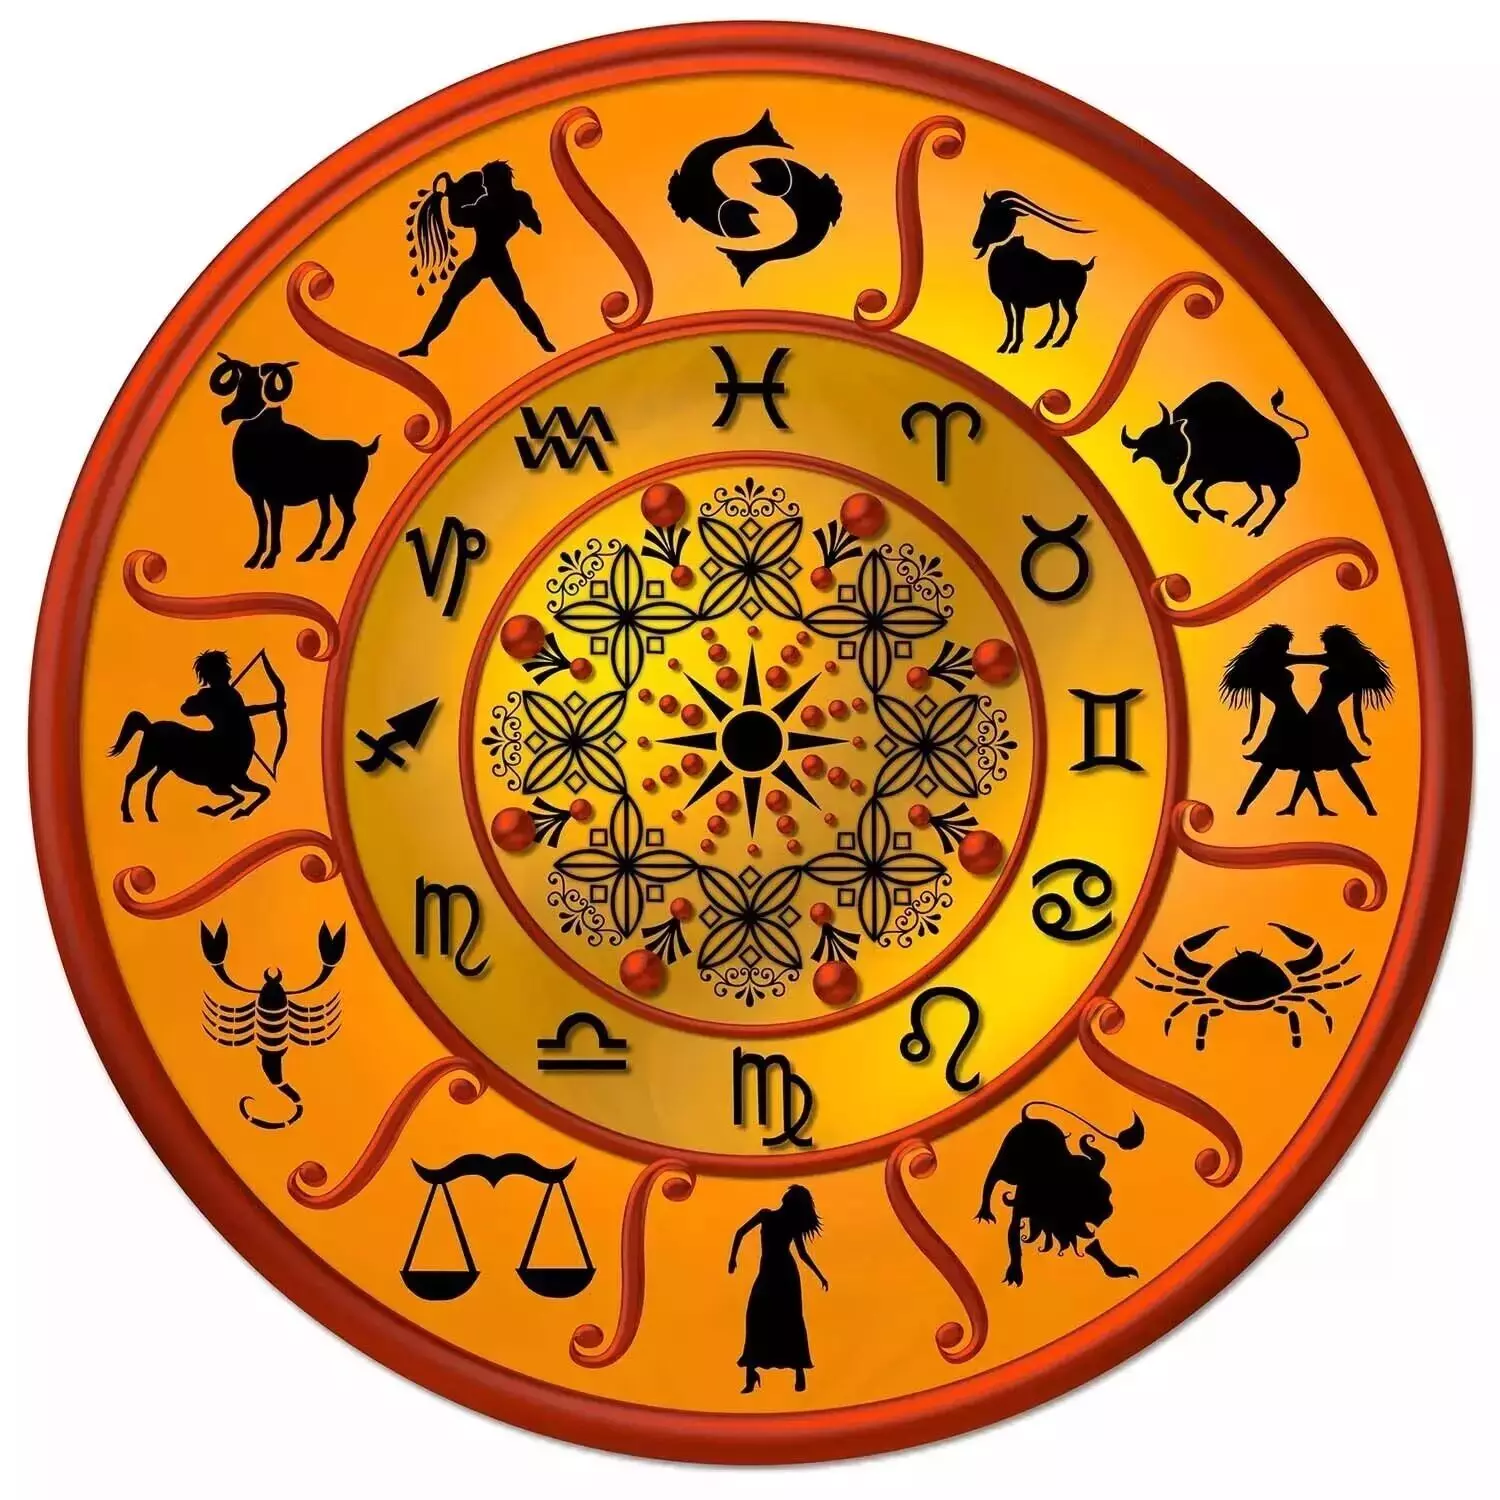 21 November – Know your todays horoscope